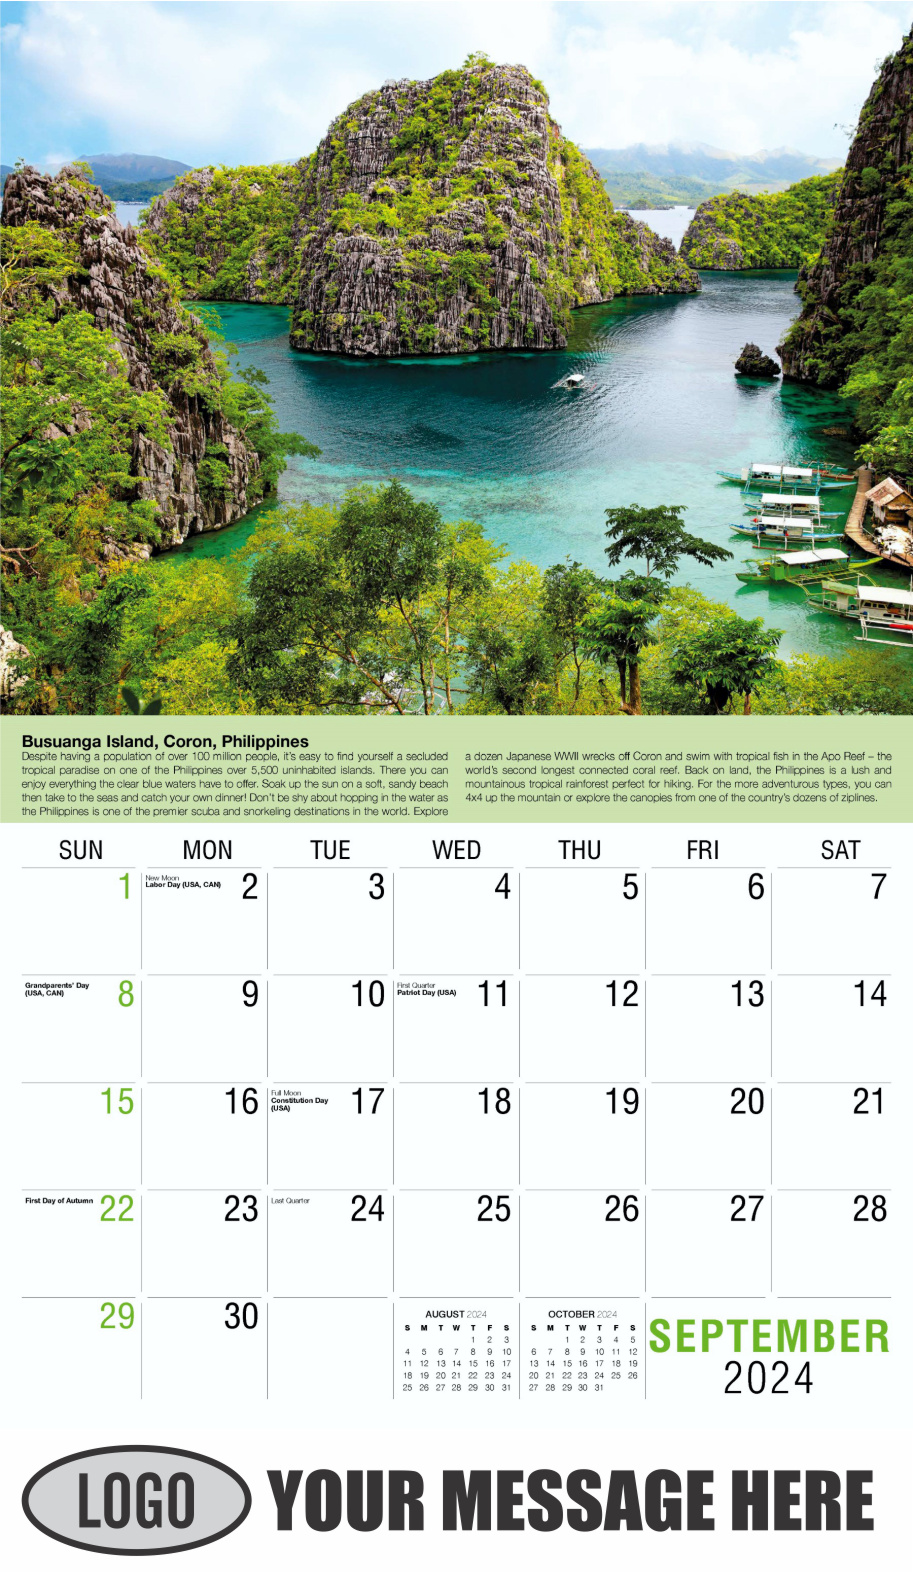 World Travel 2024 Business Advertising Wall Calendar - September